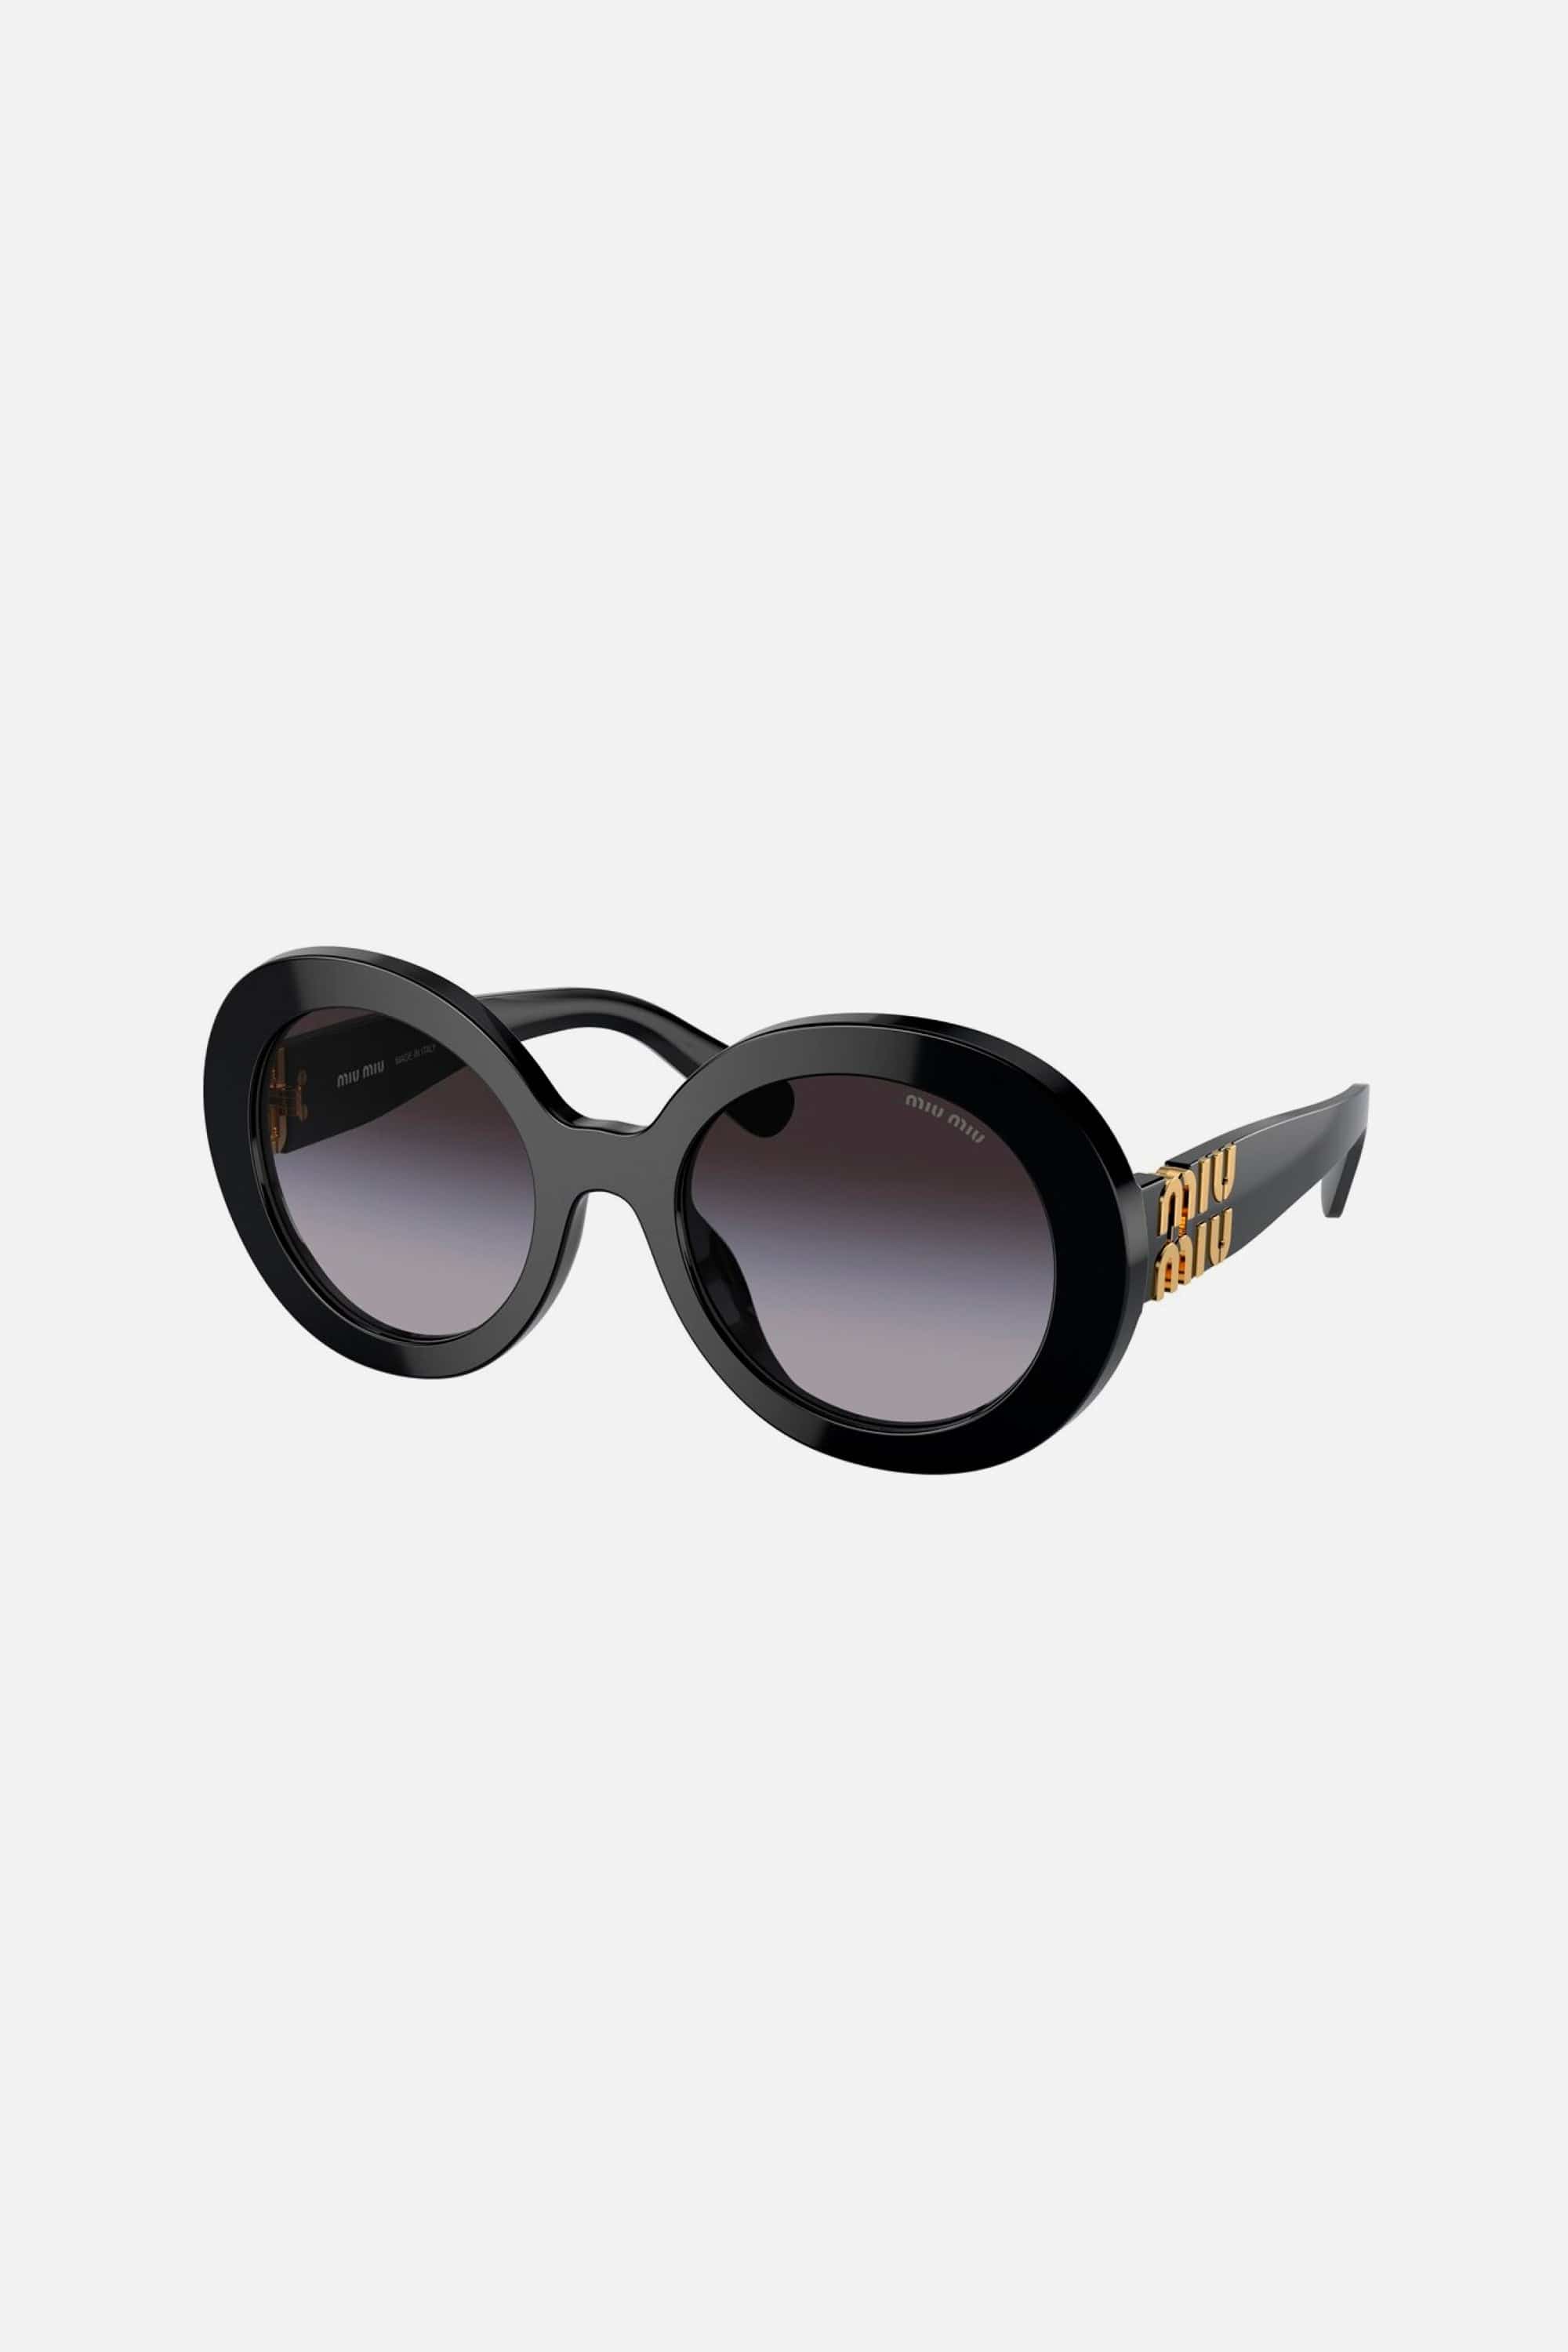 Miu Miu round black sunglasses - Eyewear Club